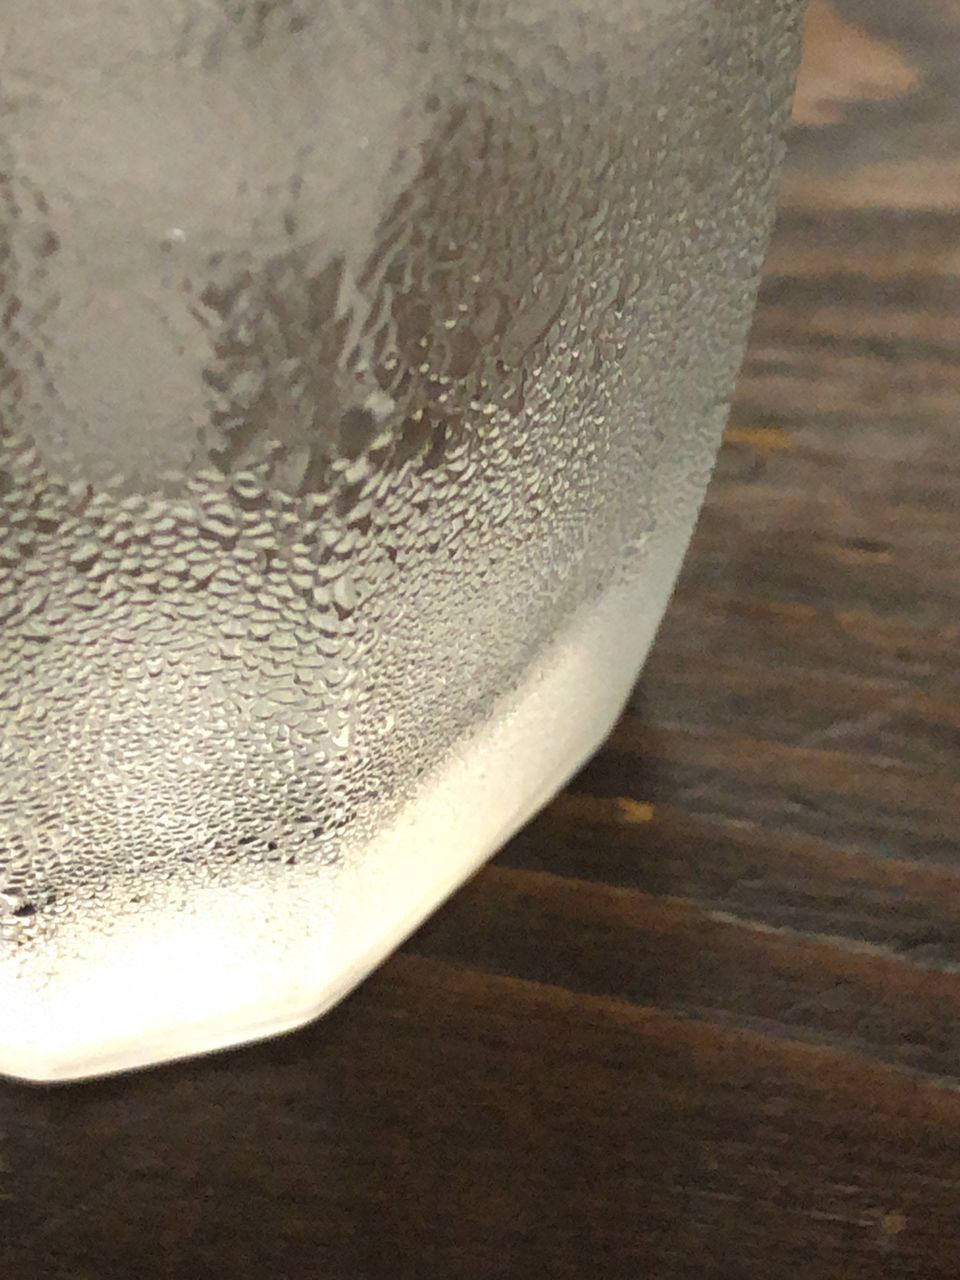 HIGH ANGLE VIEW OF GLASS ON TABLE